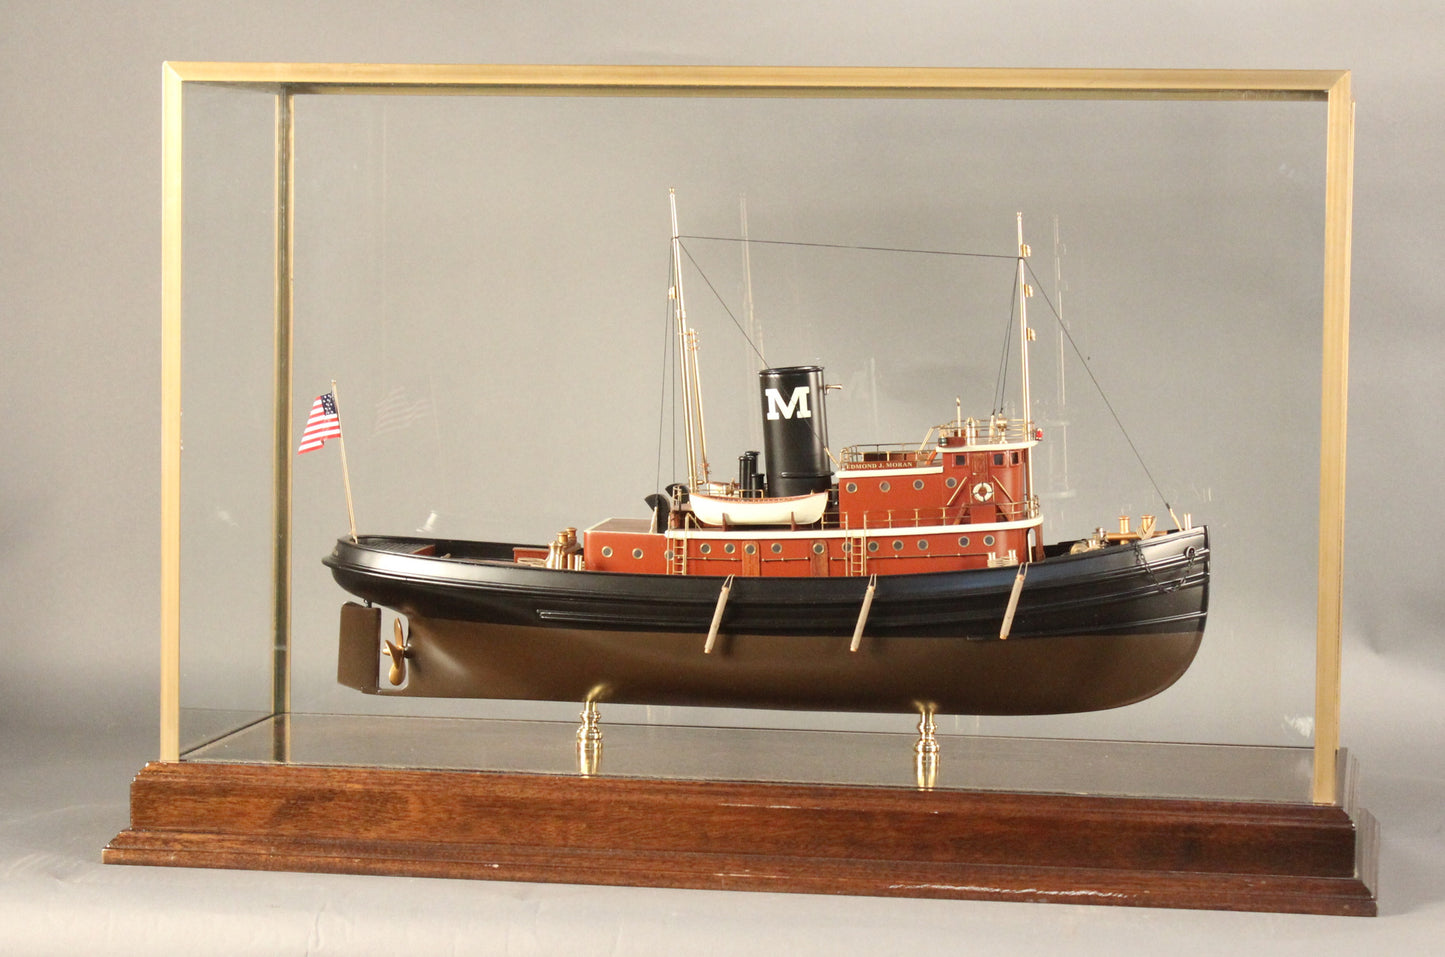 New York Harbor Tug "Edmond Moran" - Lannan Gallery